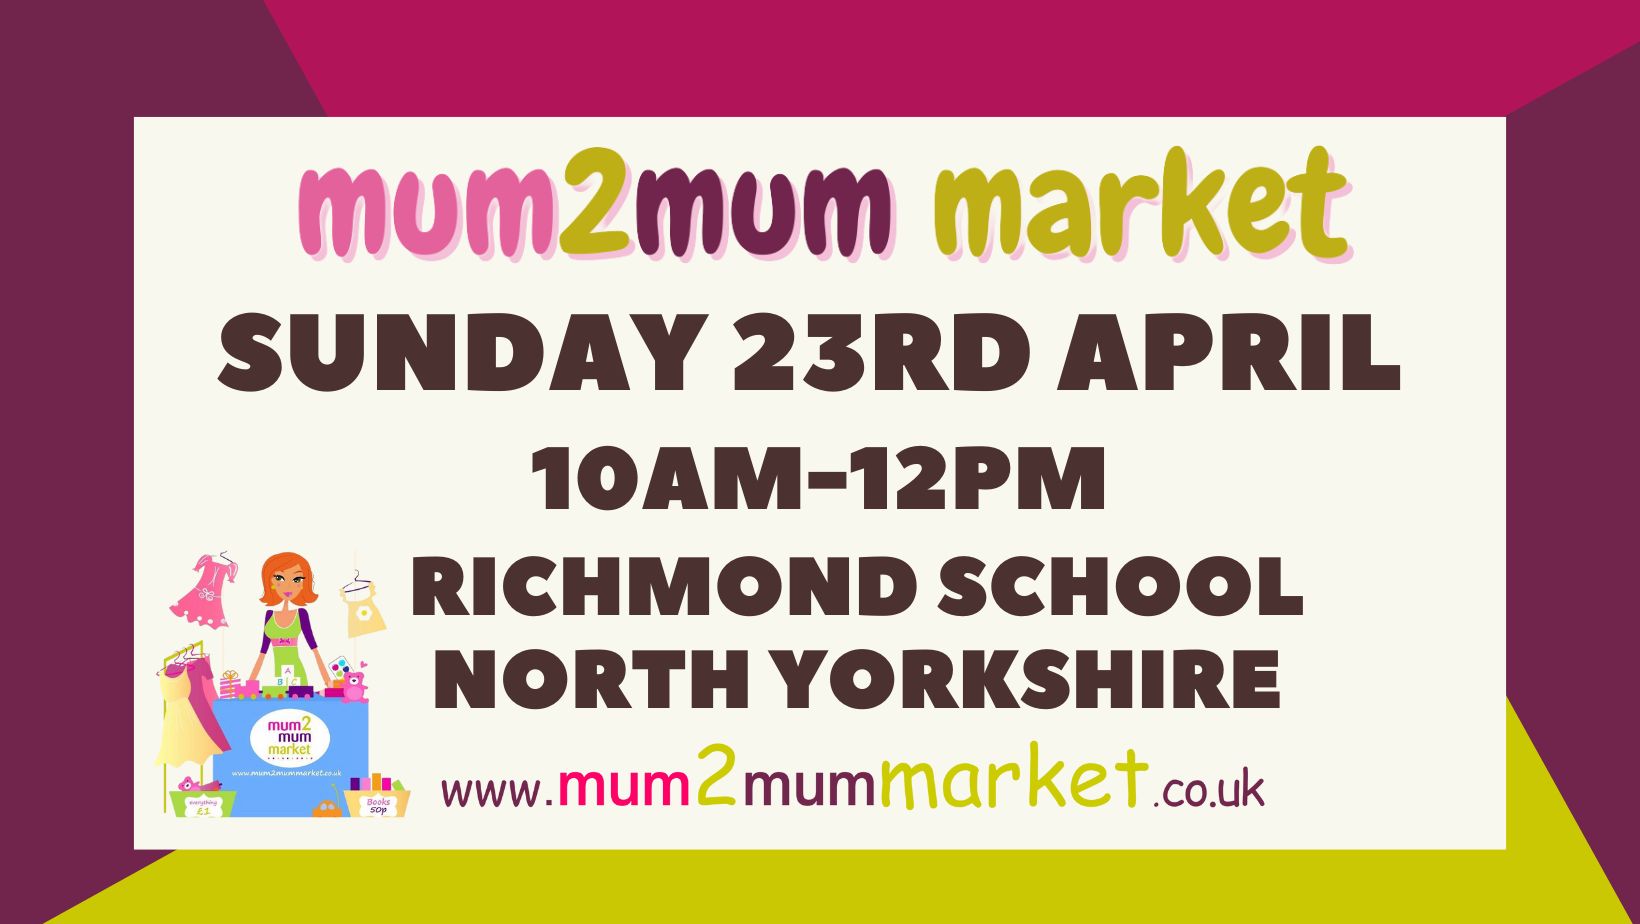 Image name mum 2 mum market richmond the 21 image from the post Mum2mum Market Richmond North Yorkshire in Yorkshire.com.